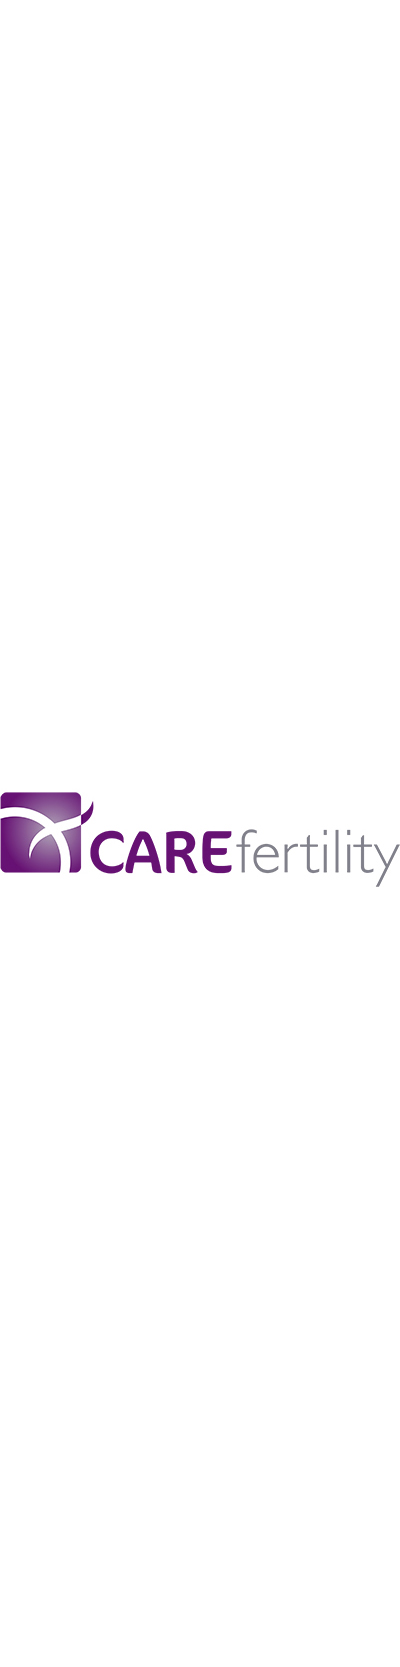 CARE_Fertility_logo copy.jpg